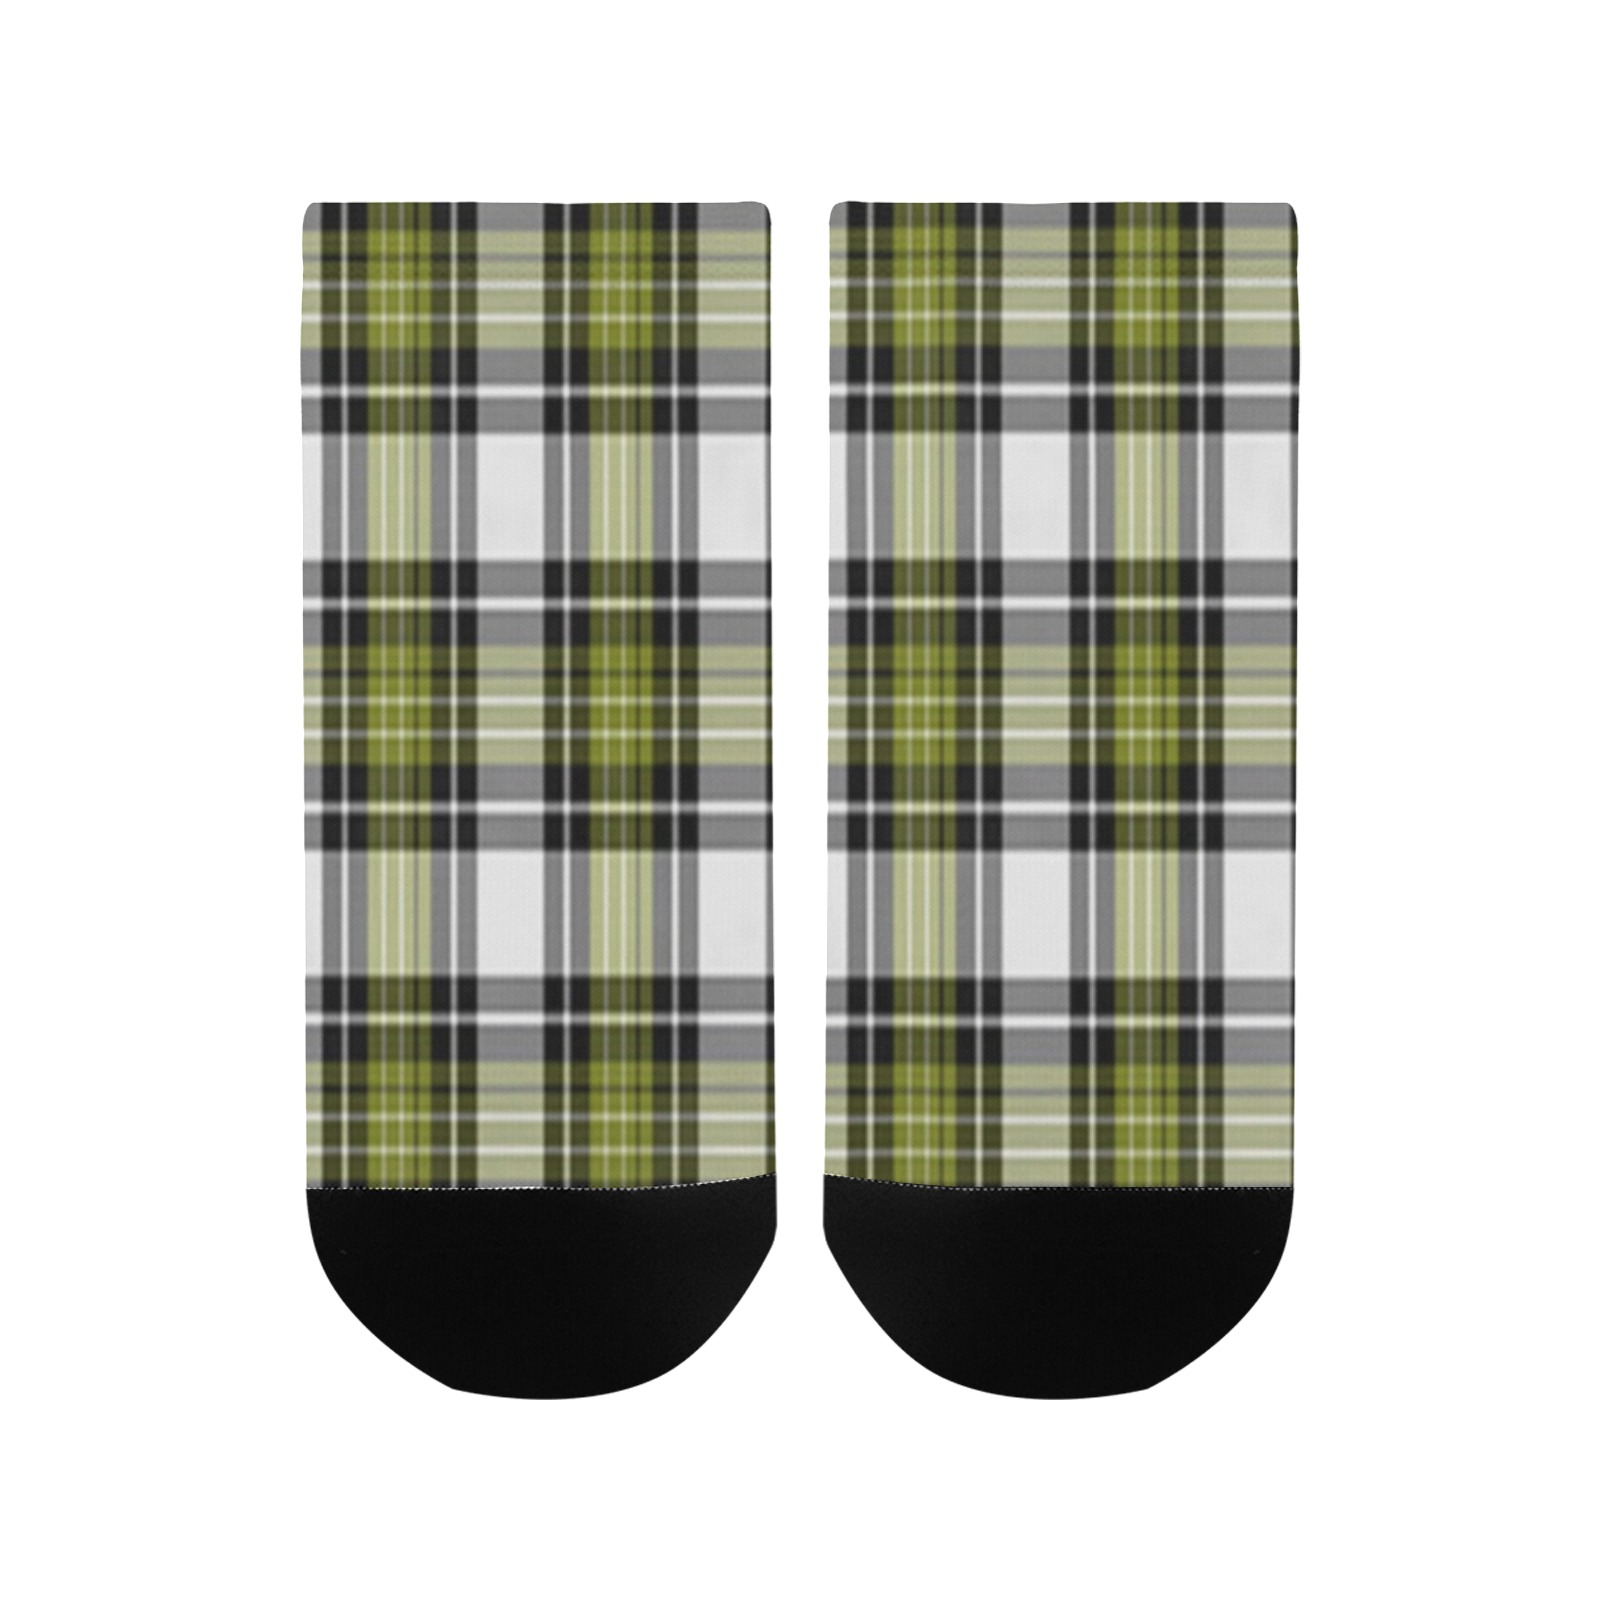 Olive Green Black Plaid Men's Ankle Socks